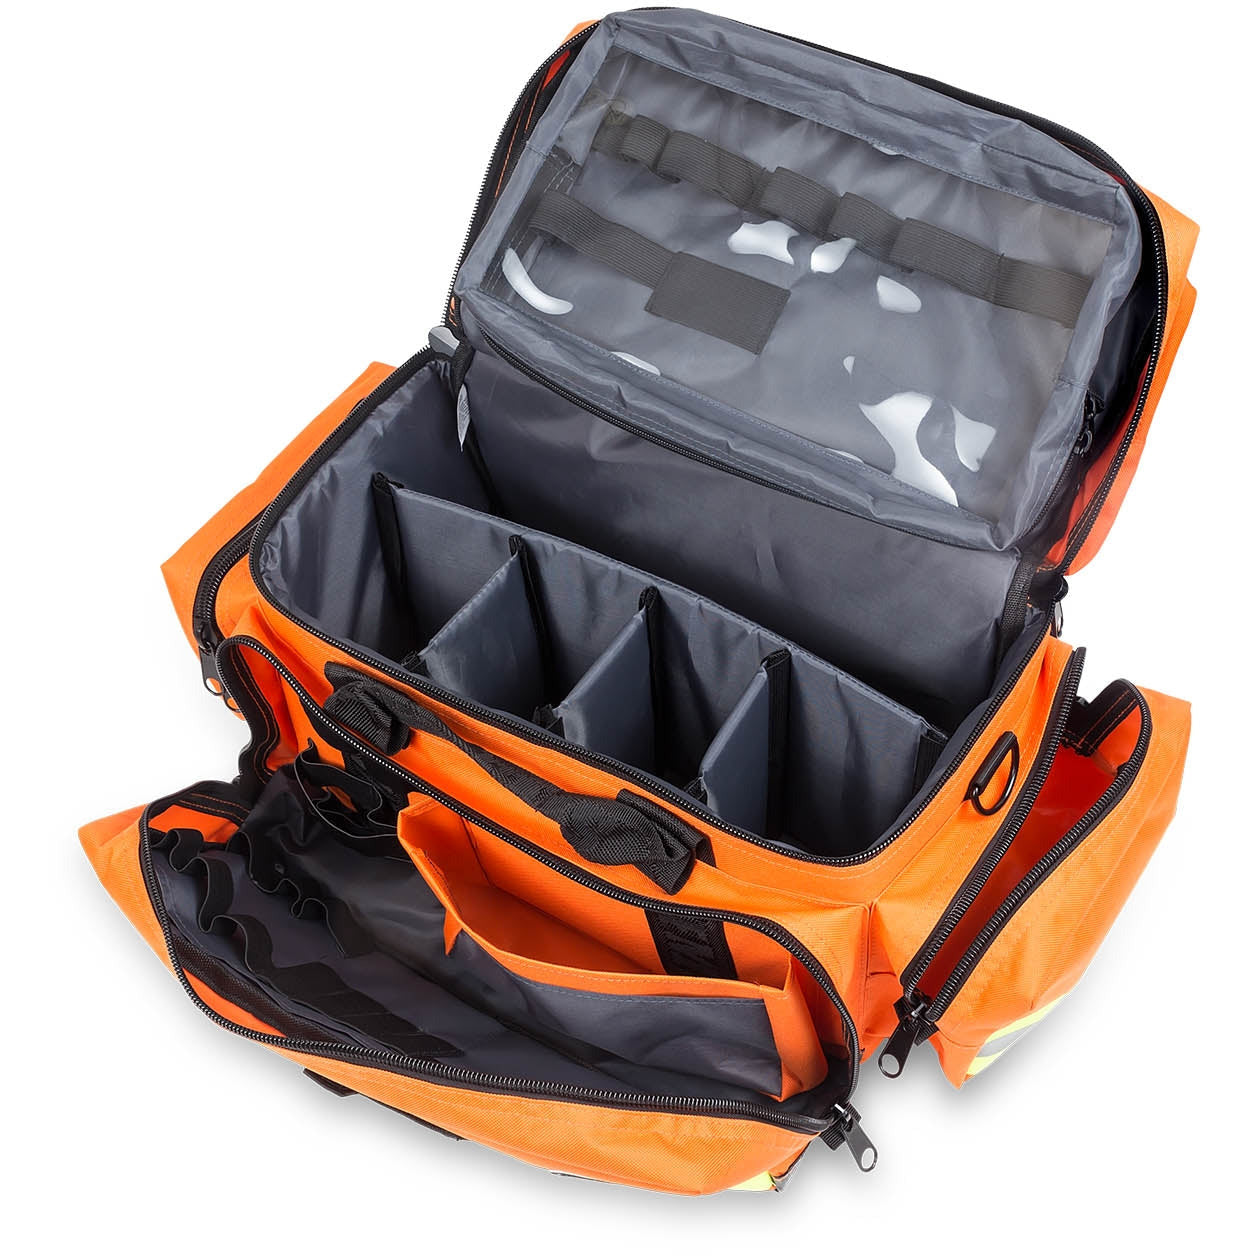 Elite Large Capacity Emergency Bag - Orange